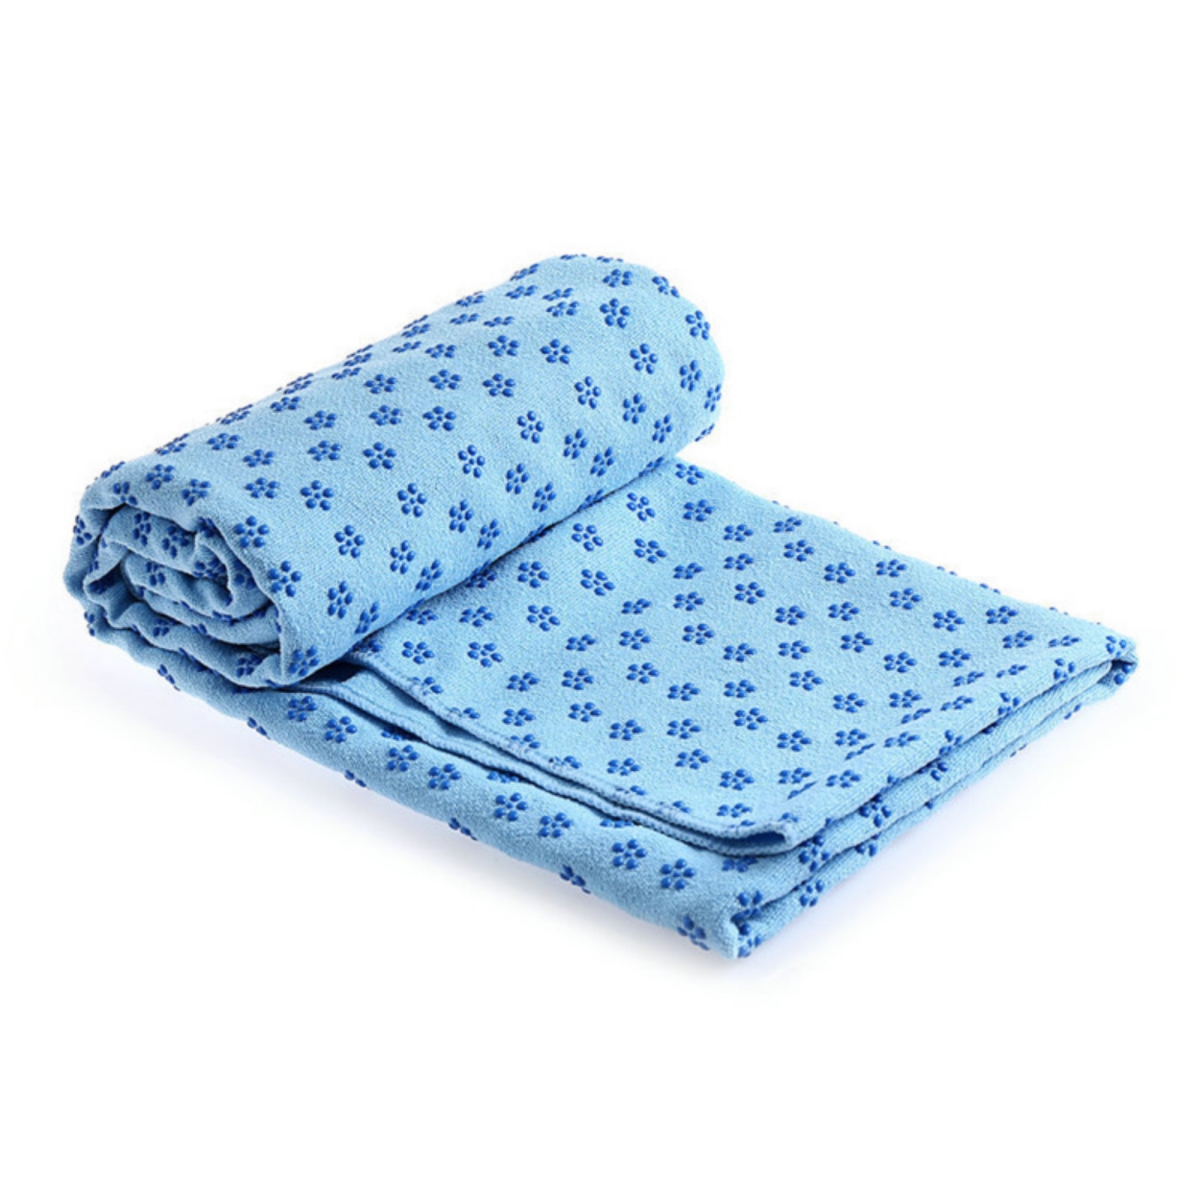 Picture of JupiterGear JG-YOGATWL-SOLID-LGTBLU Premium Absorption Hot Yoga Mat Towel with Slip-Resistant Grip Dots - Light Blue